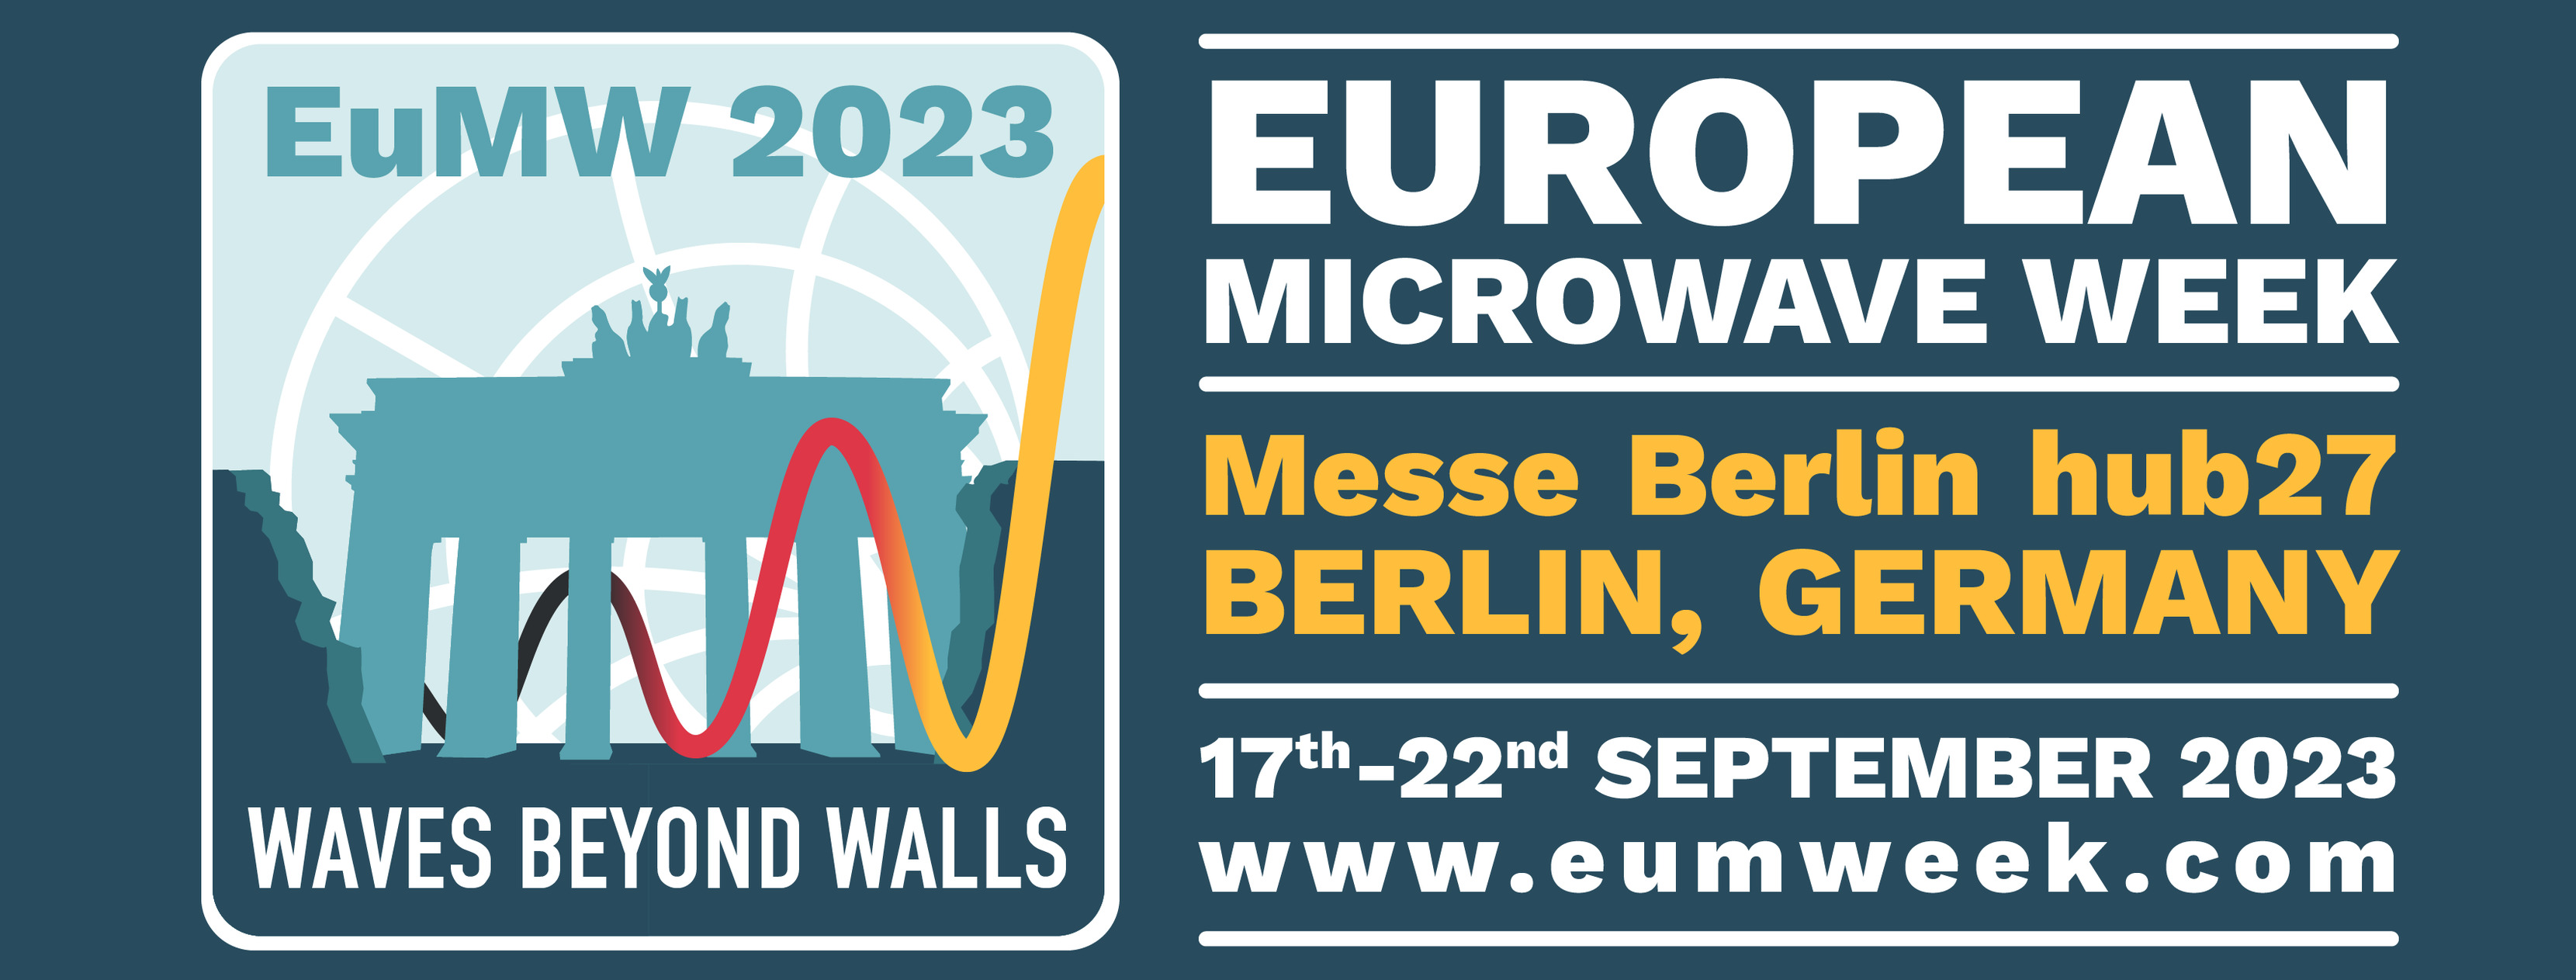 Meet us at EuMW 2023 in Berlin!